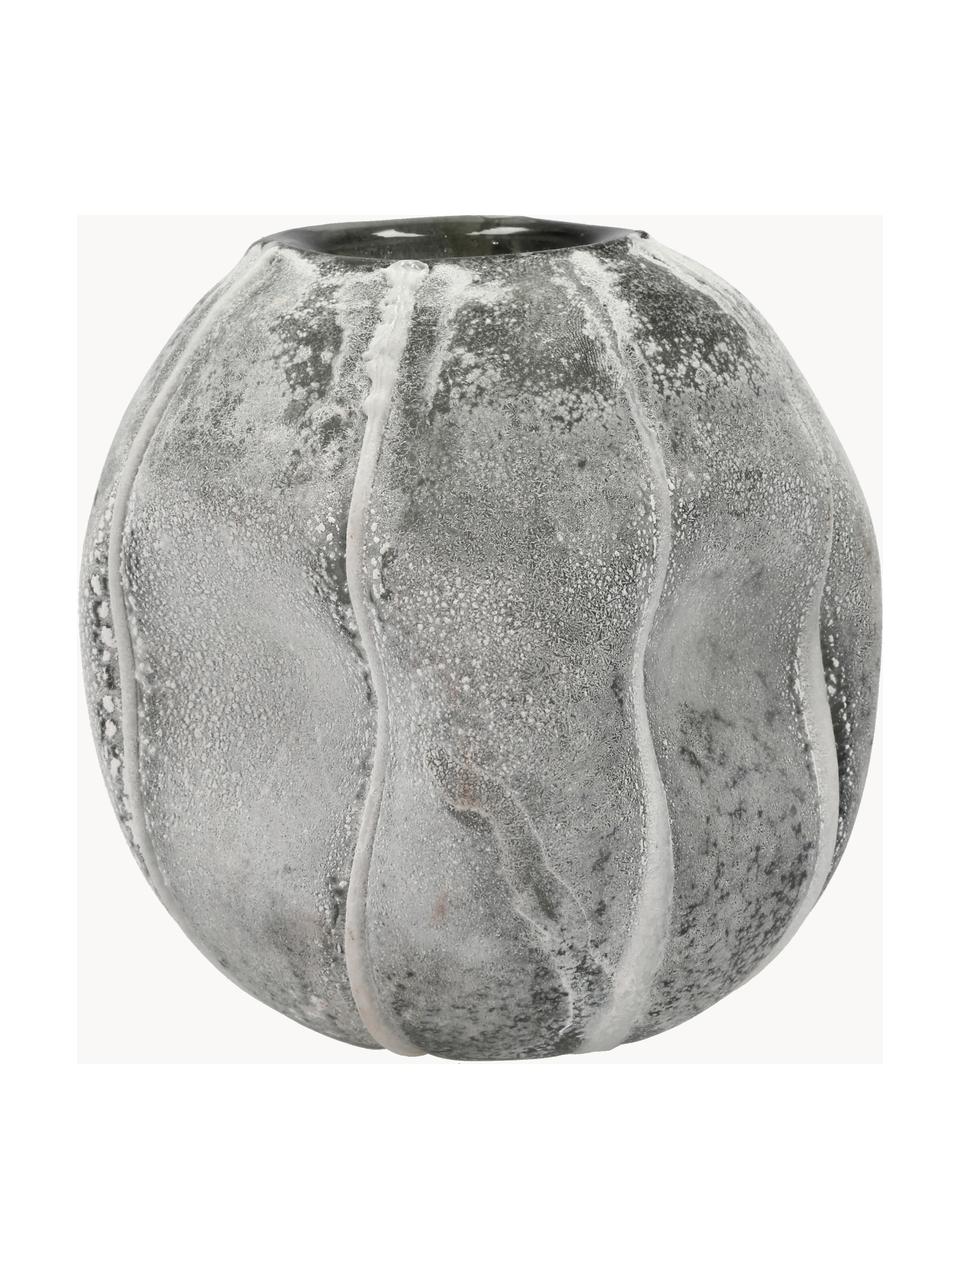 Glas-Vase Sigt in H organischer Form, 13 cm | Westwing